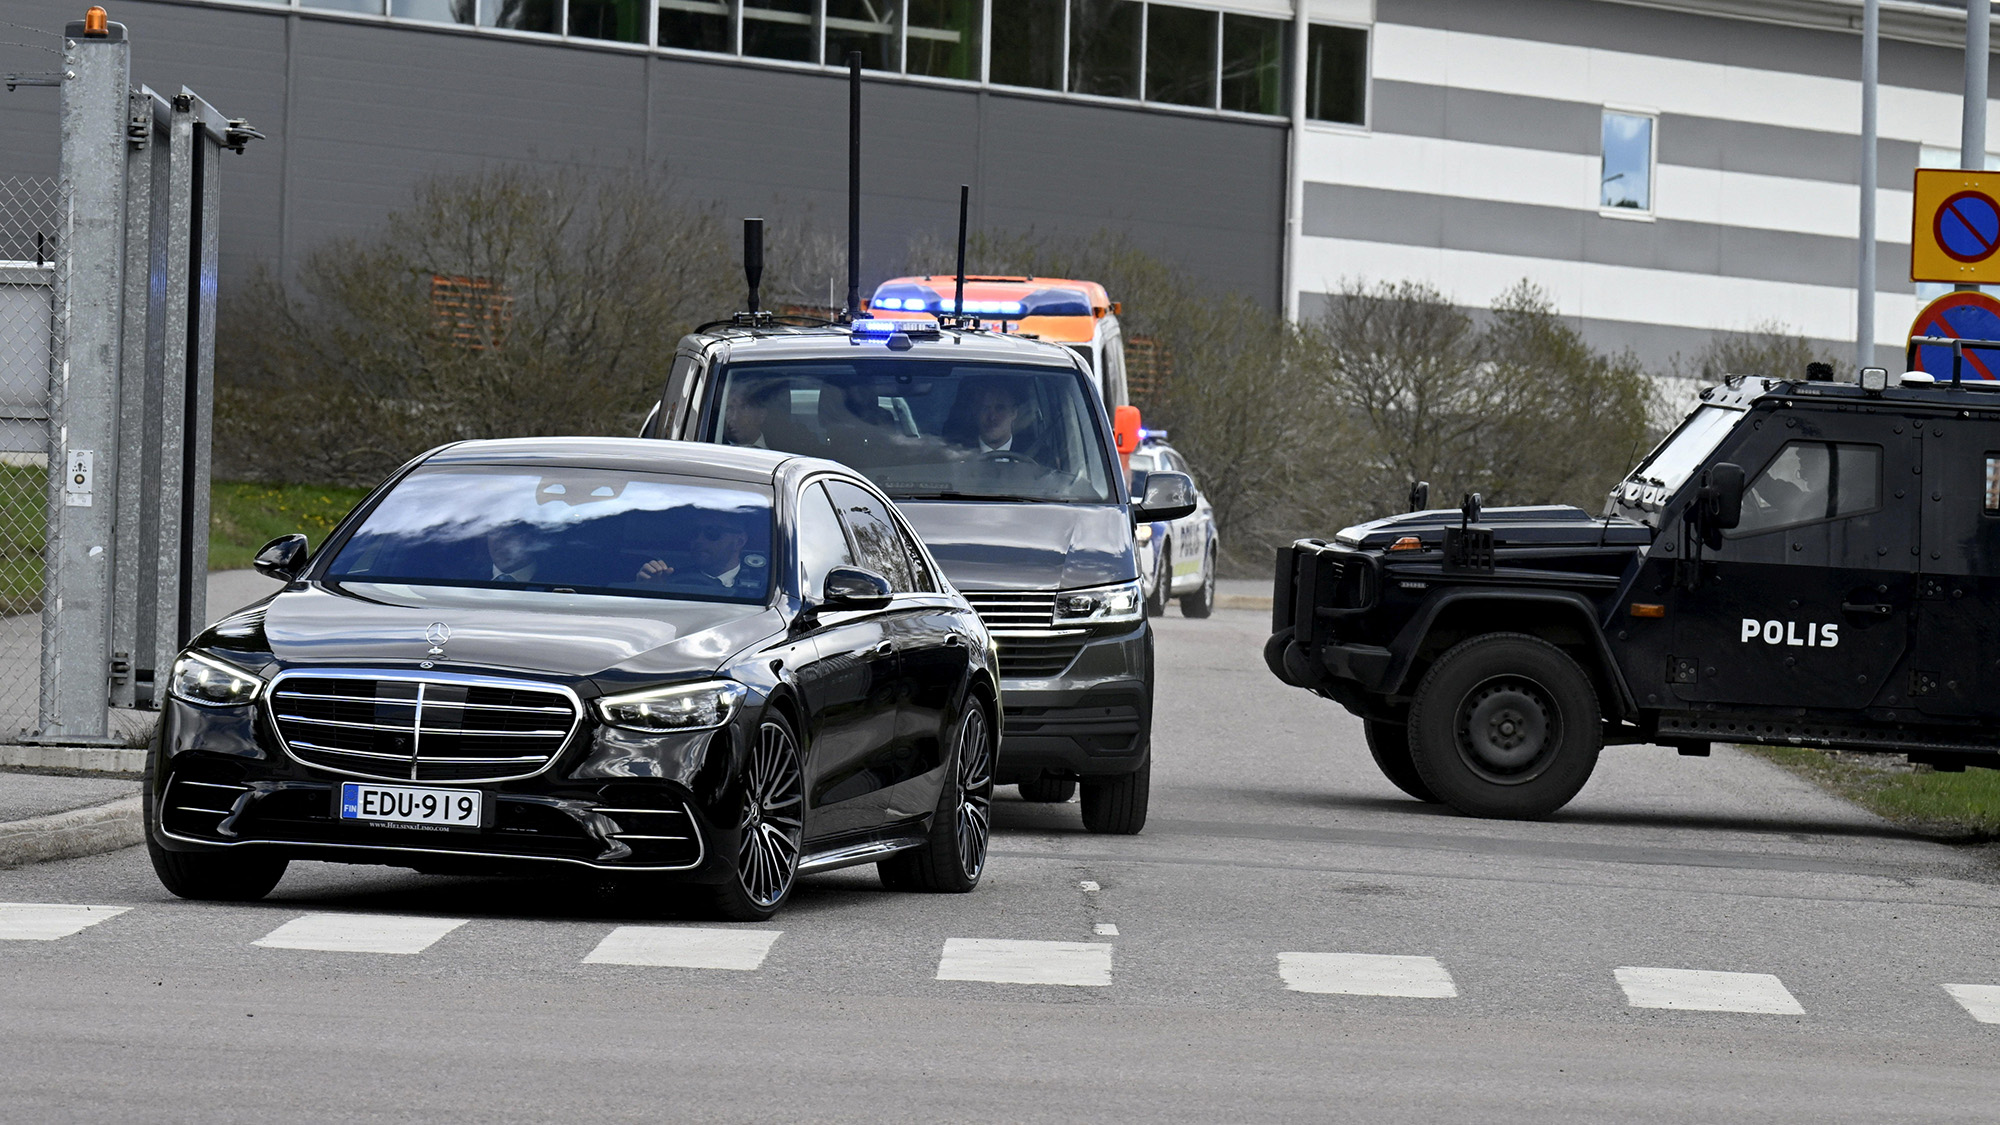 The motorcade with Ukraine's President Volodymyr Zelensky leaves the Helsinki-Vantaa airport, as Ukraine's President arrives on a surprise visit to Finland, in Vantaa, Finland, on May 3.